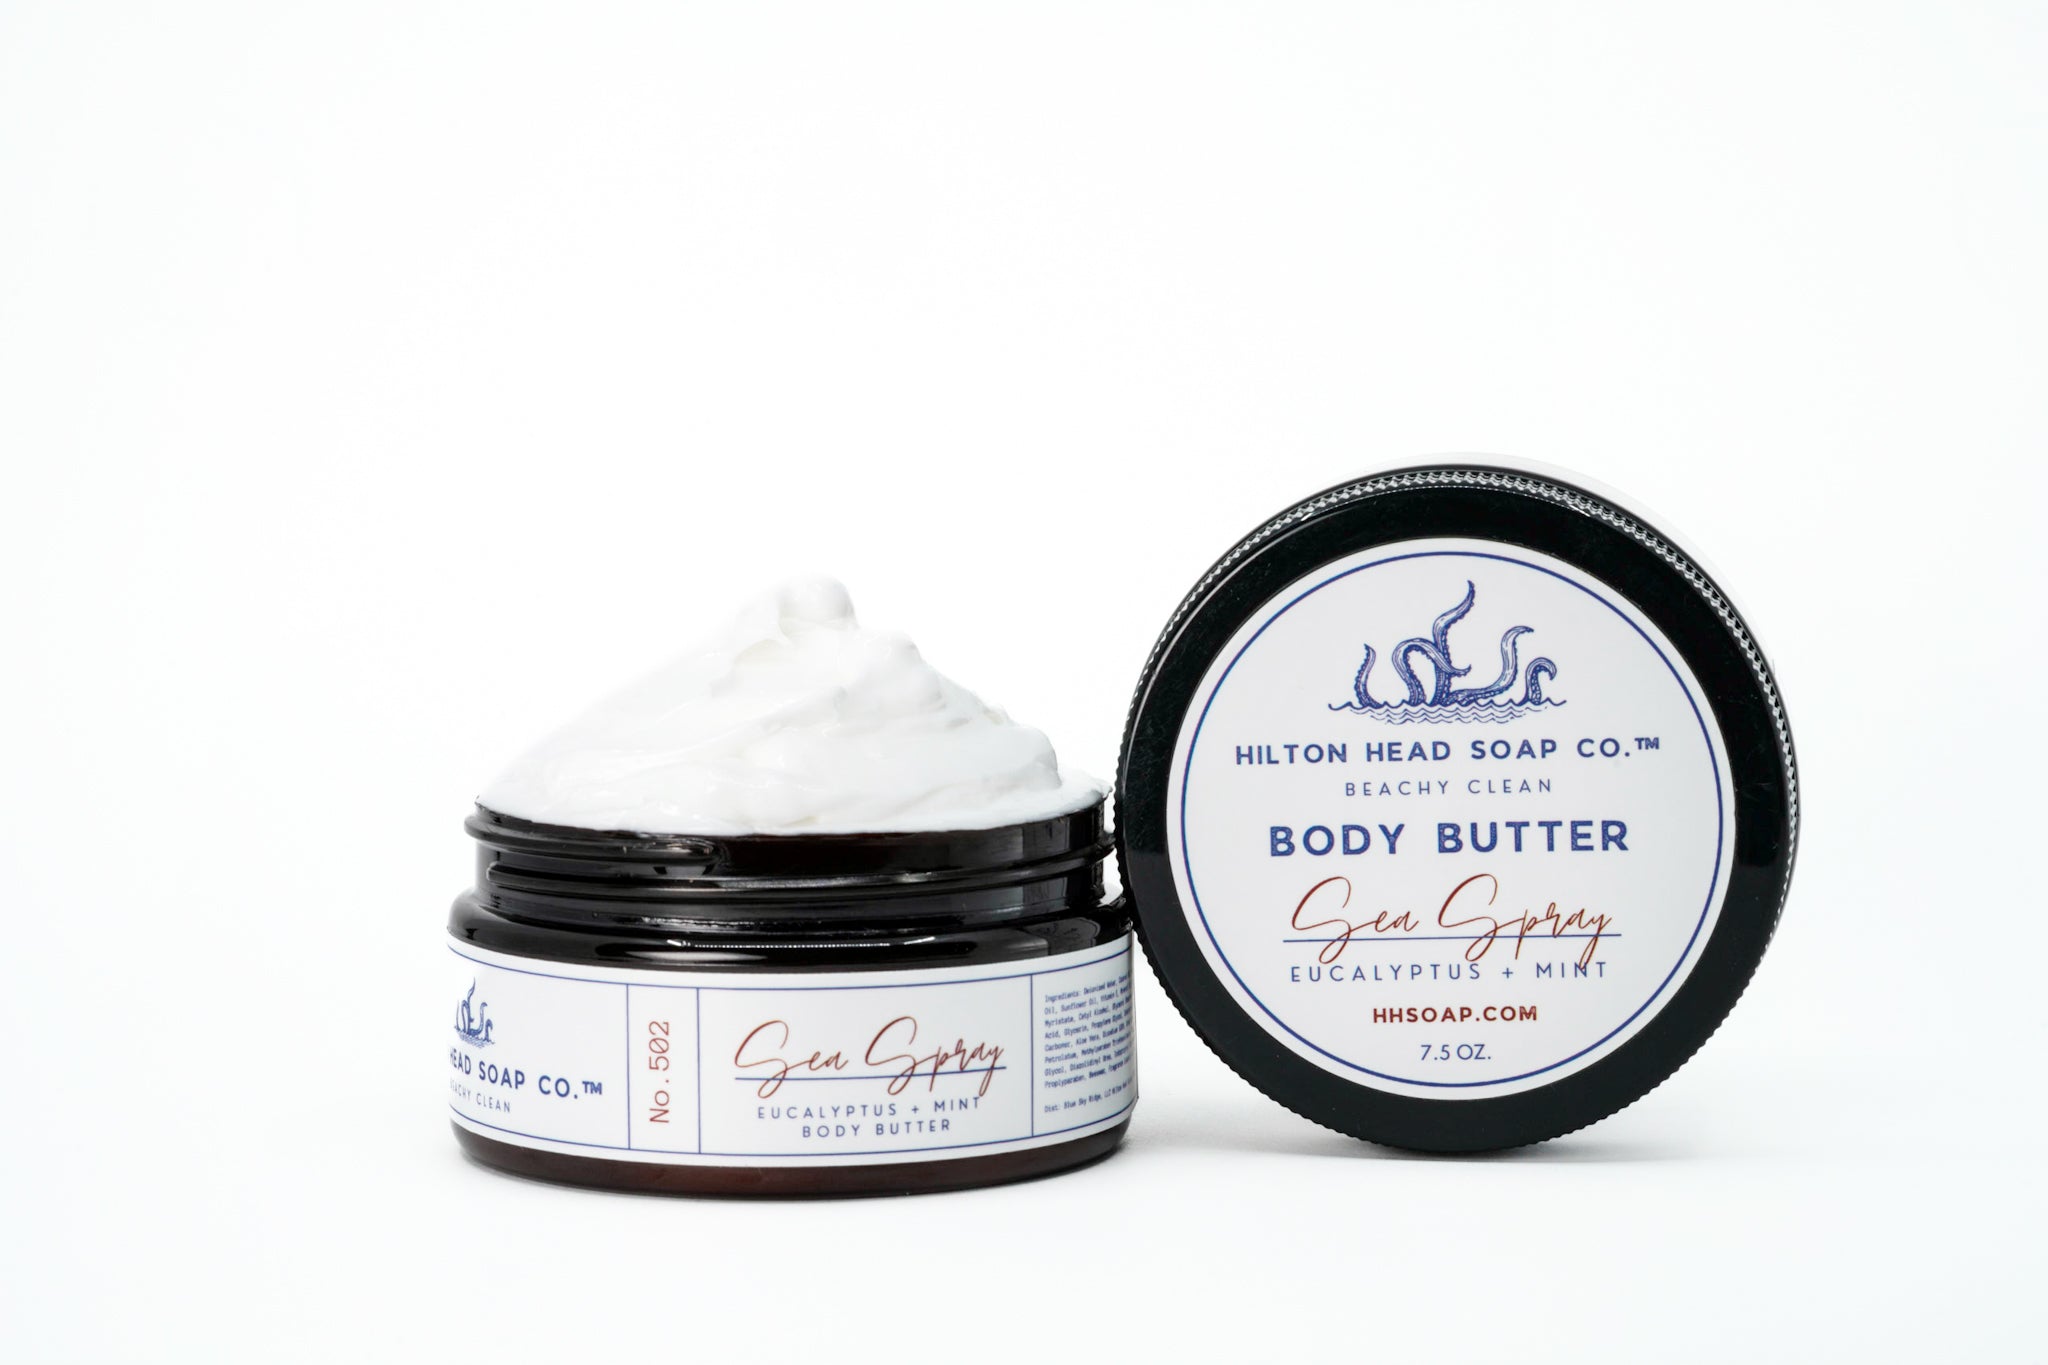 Sea Spray Eucalyptus + Mint Body Butter